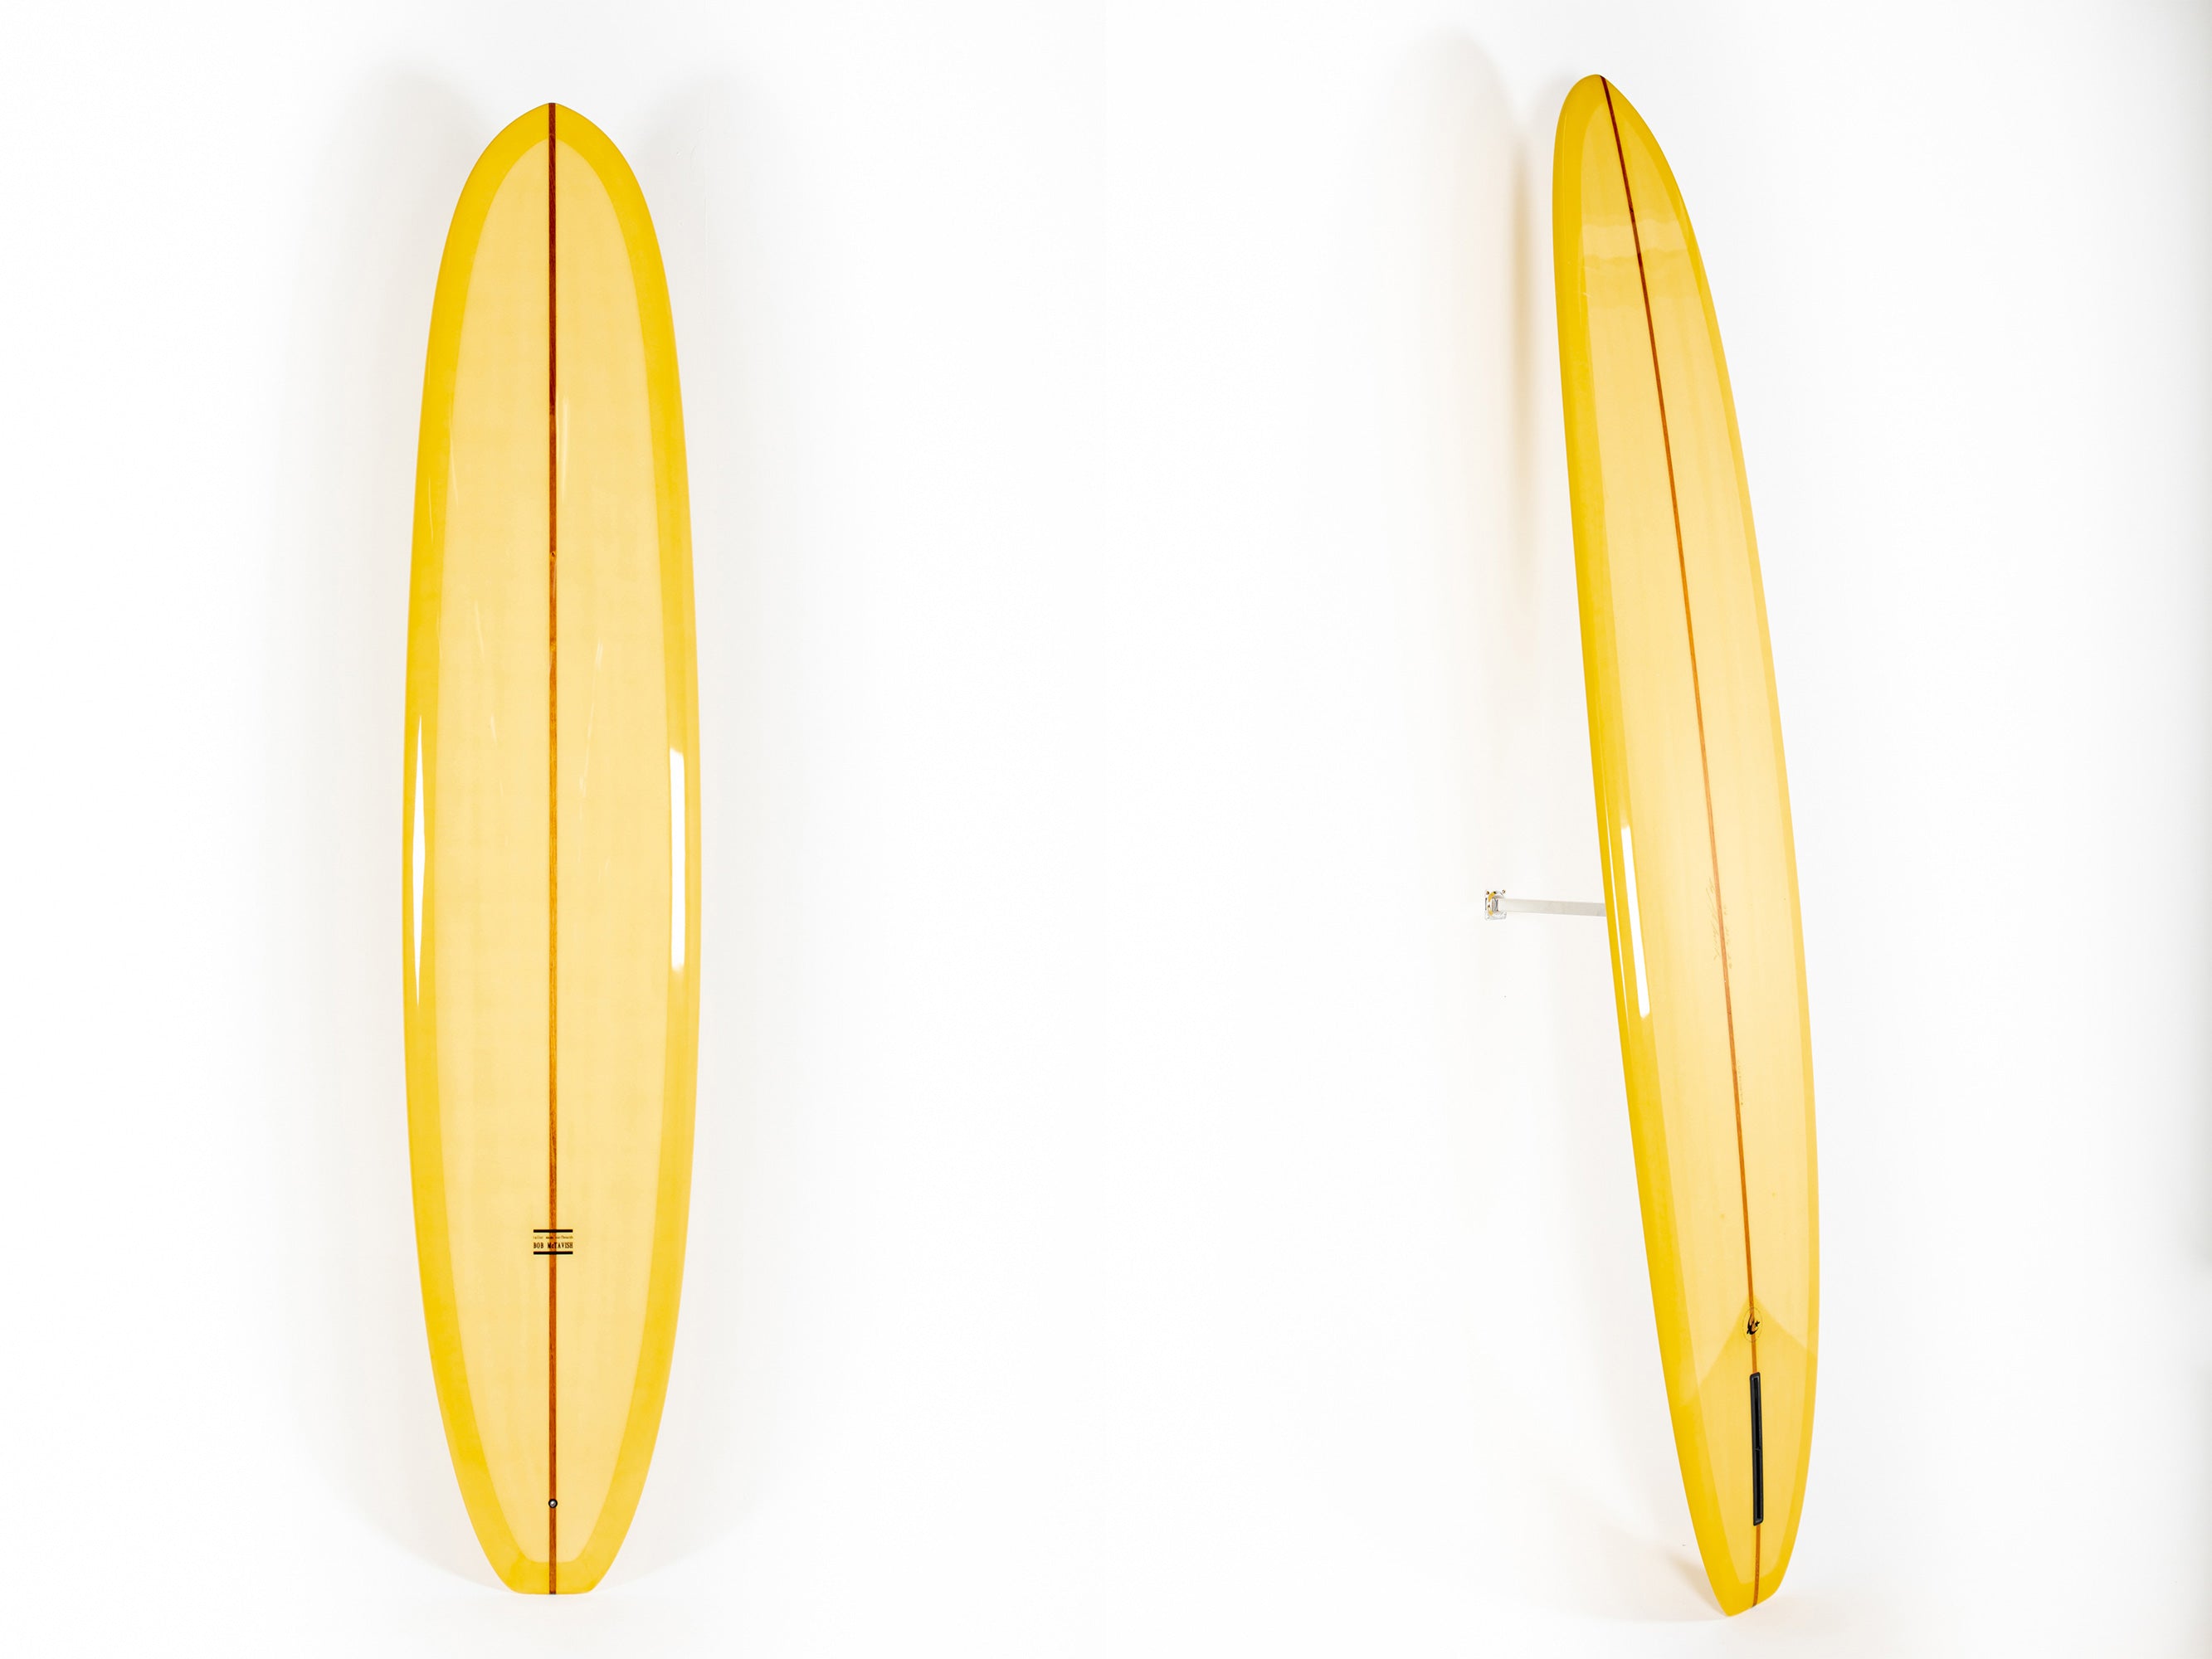 Pukas Surf Shop McTavish Surfboards Noosa 66